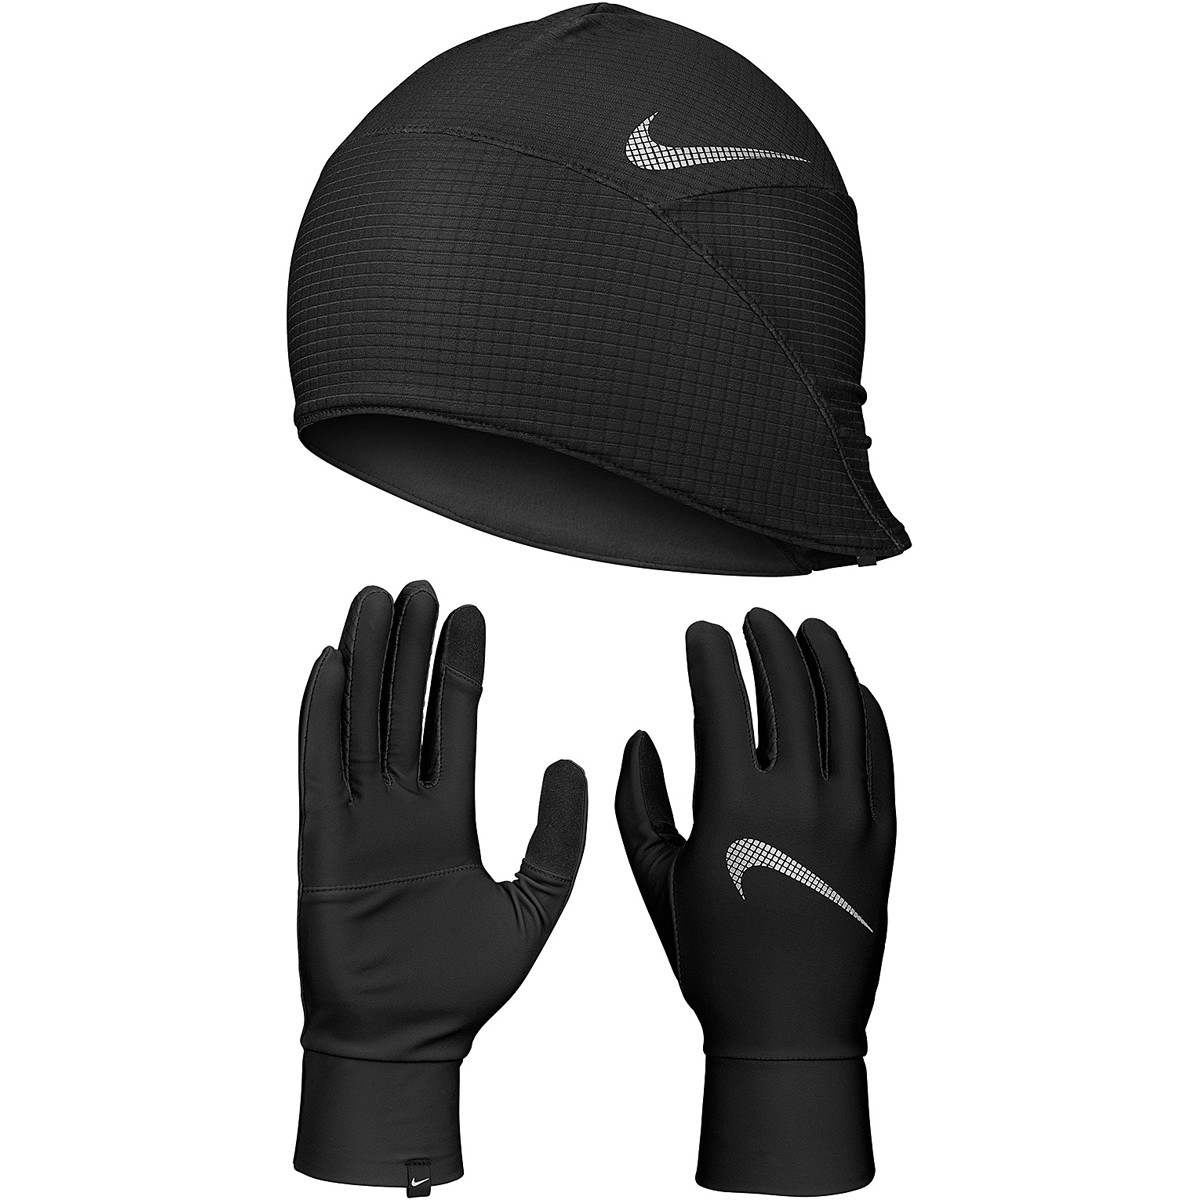 Bonnet Nike sportswear - Gants, bonnet - Tennis Achat